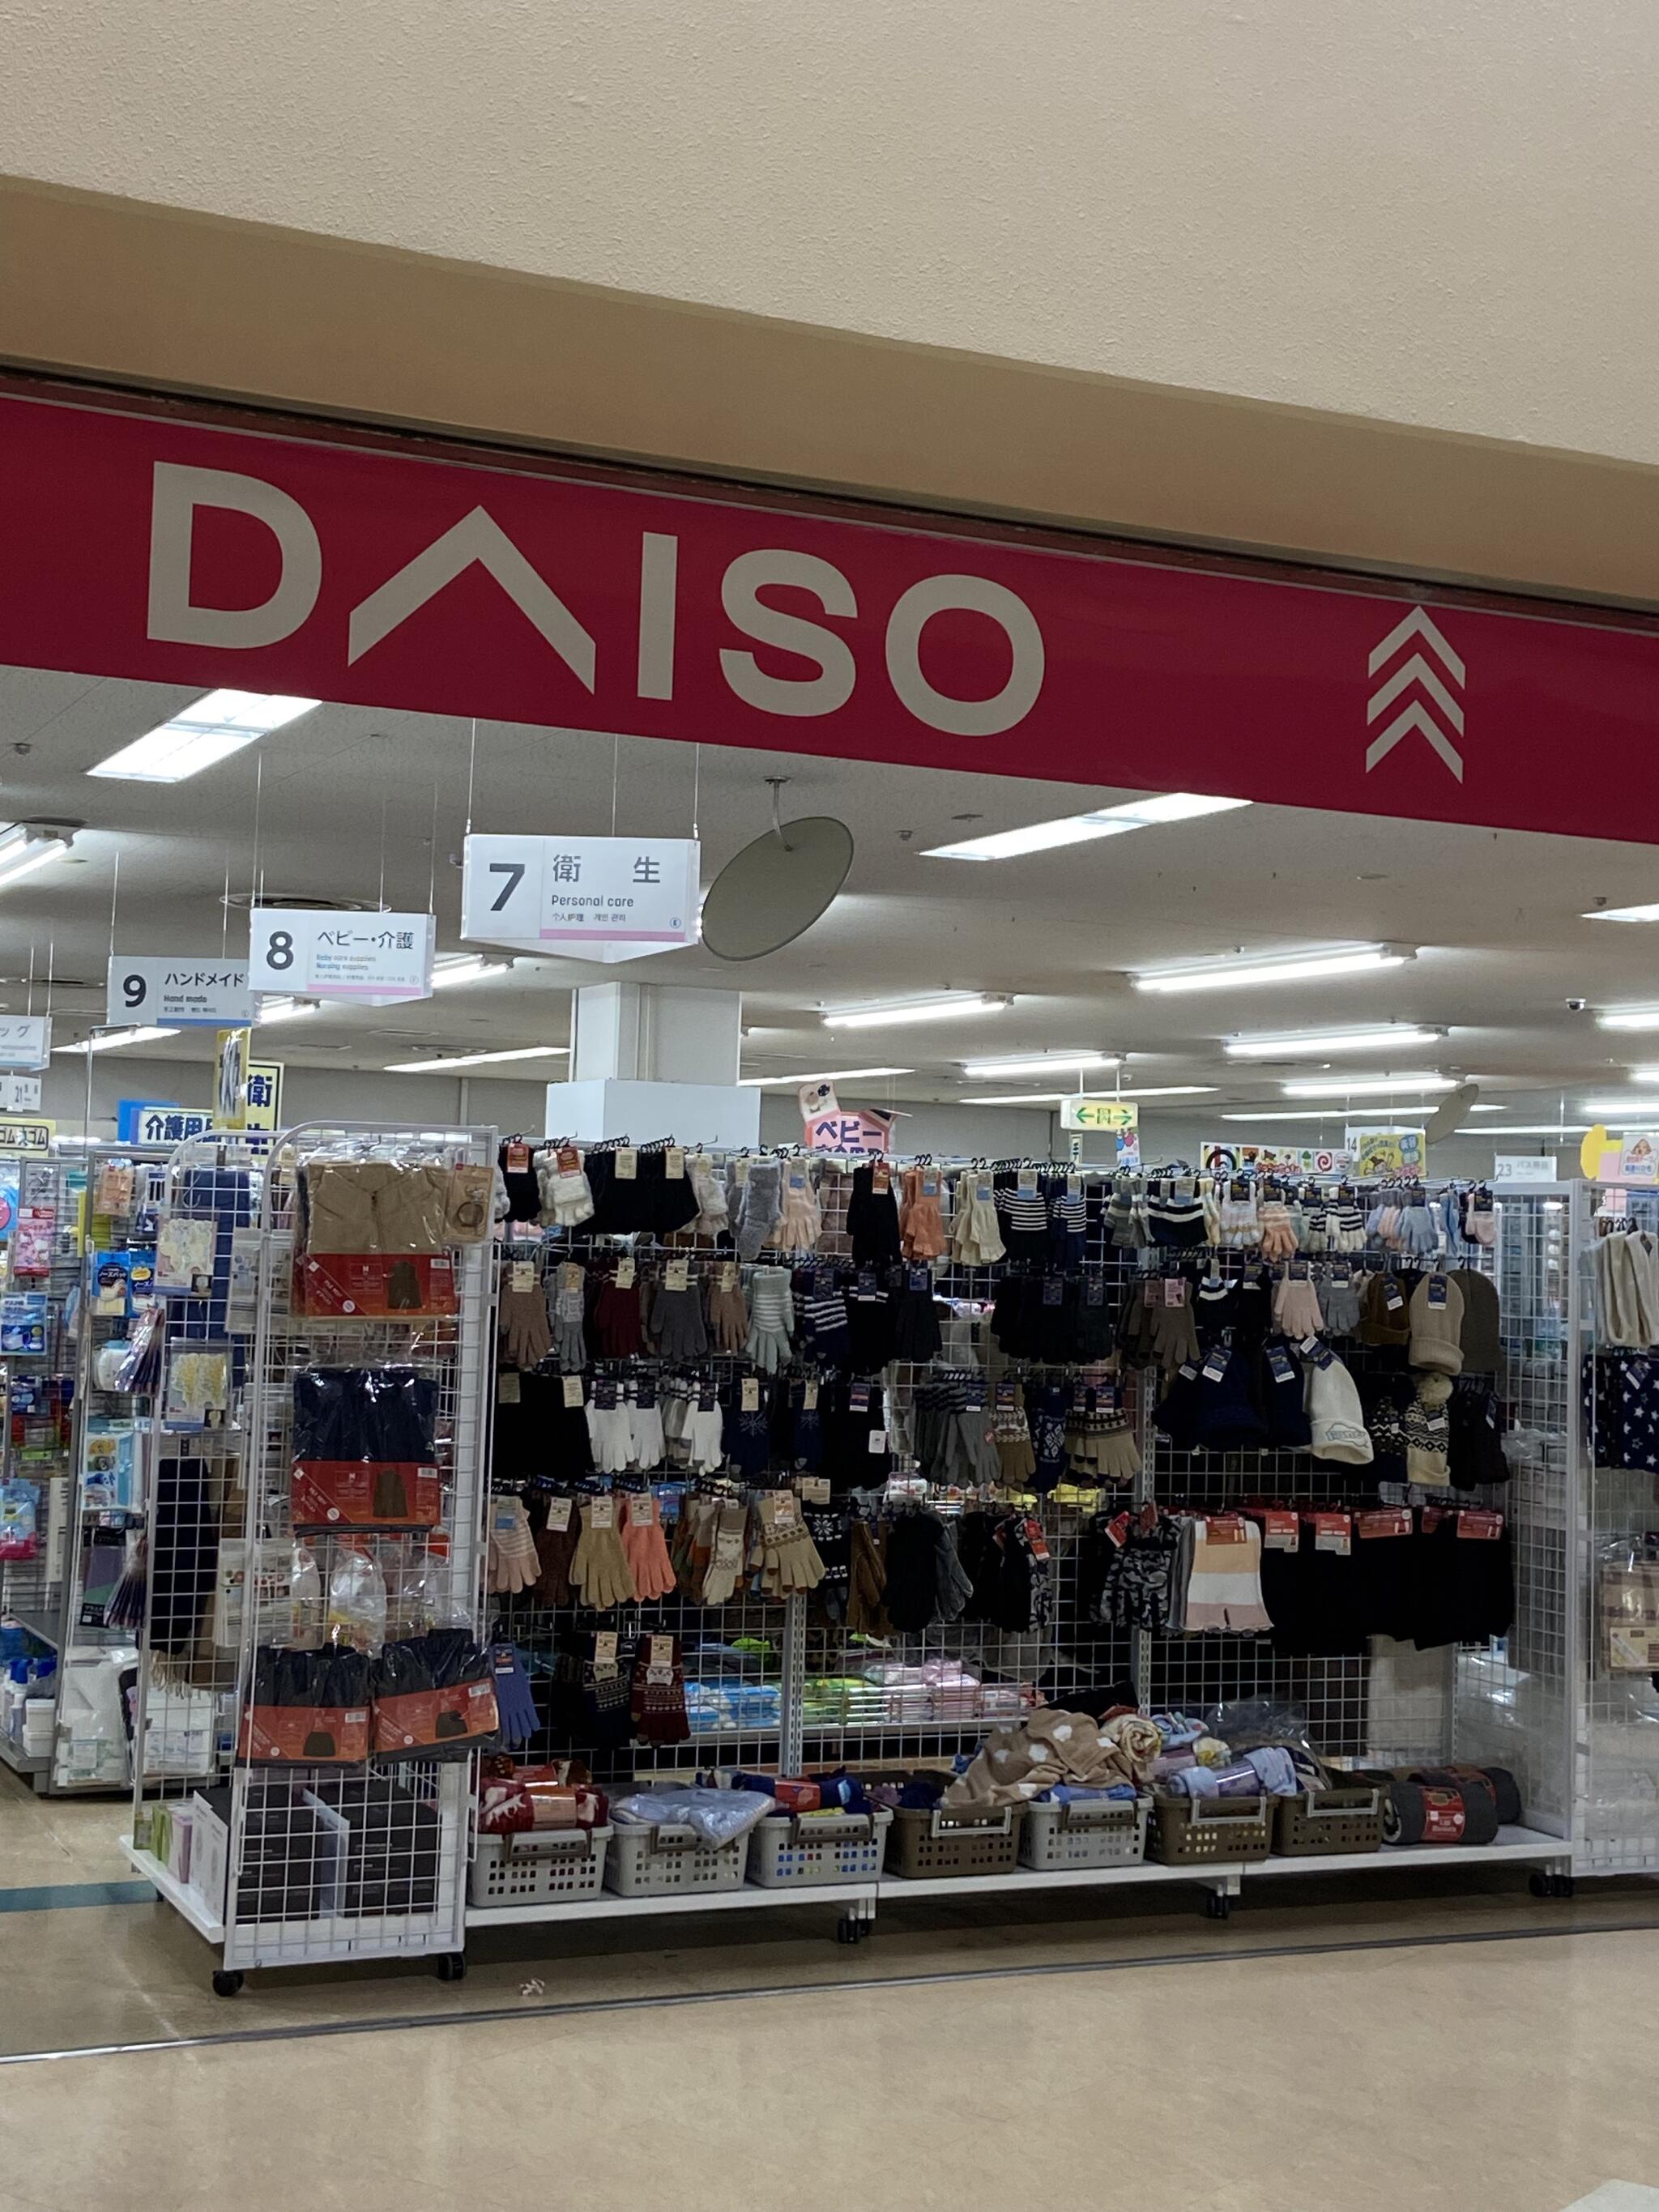 DAISO デイリーカナートポートタウン店の代表写真2